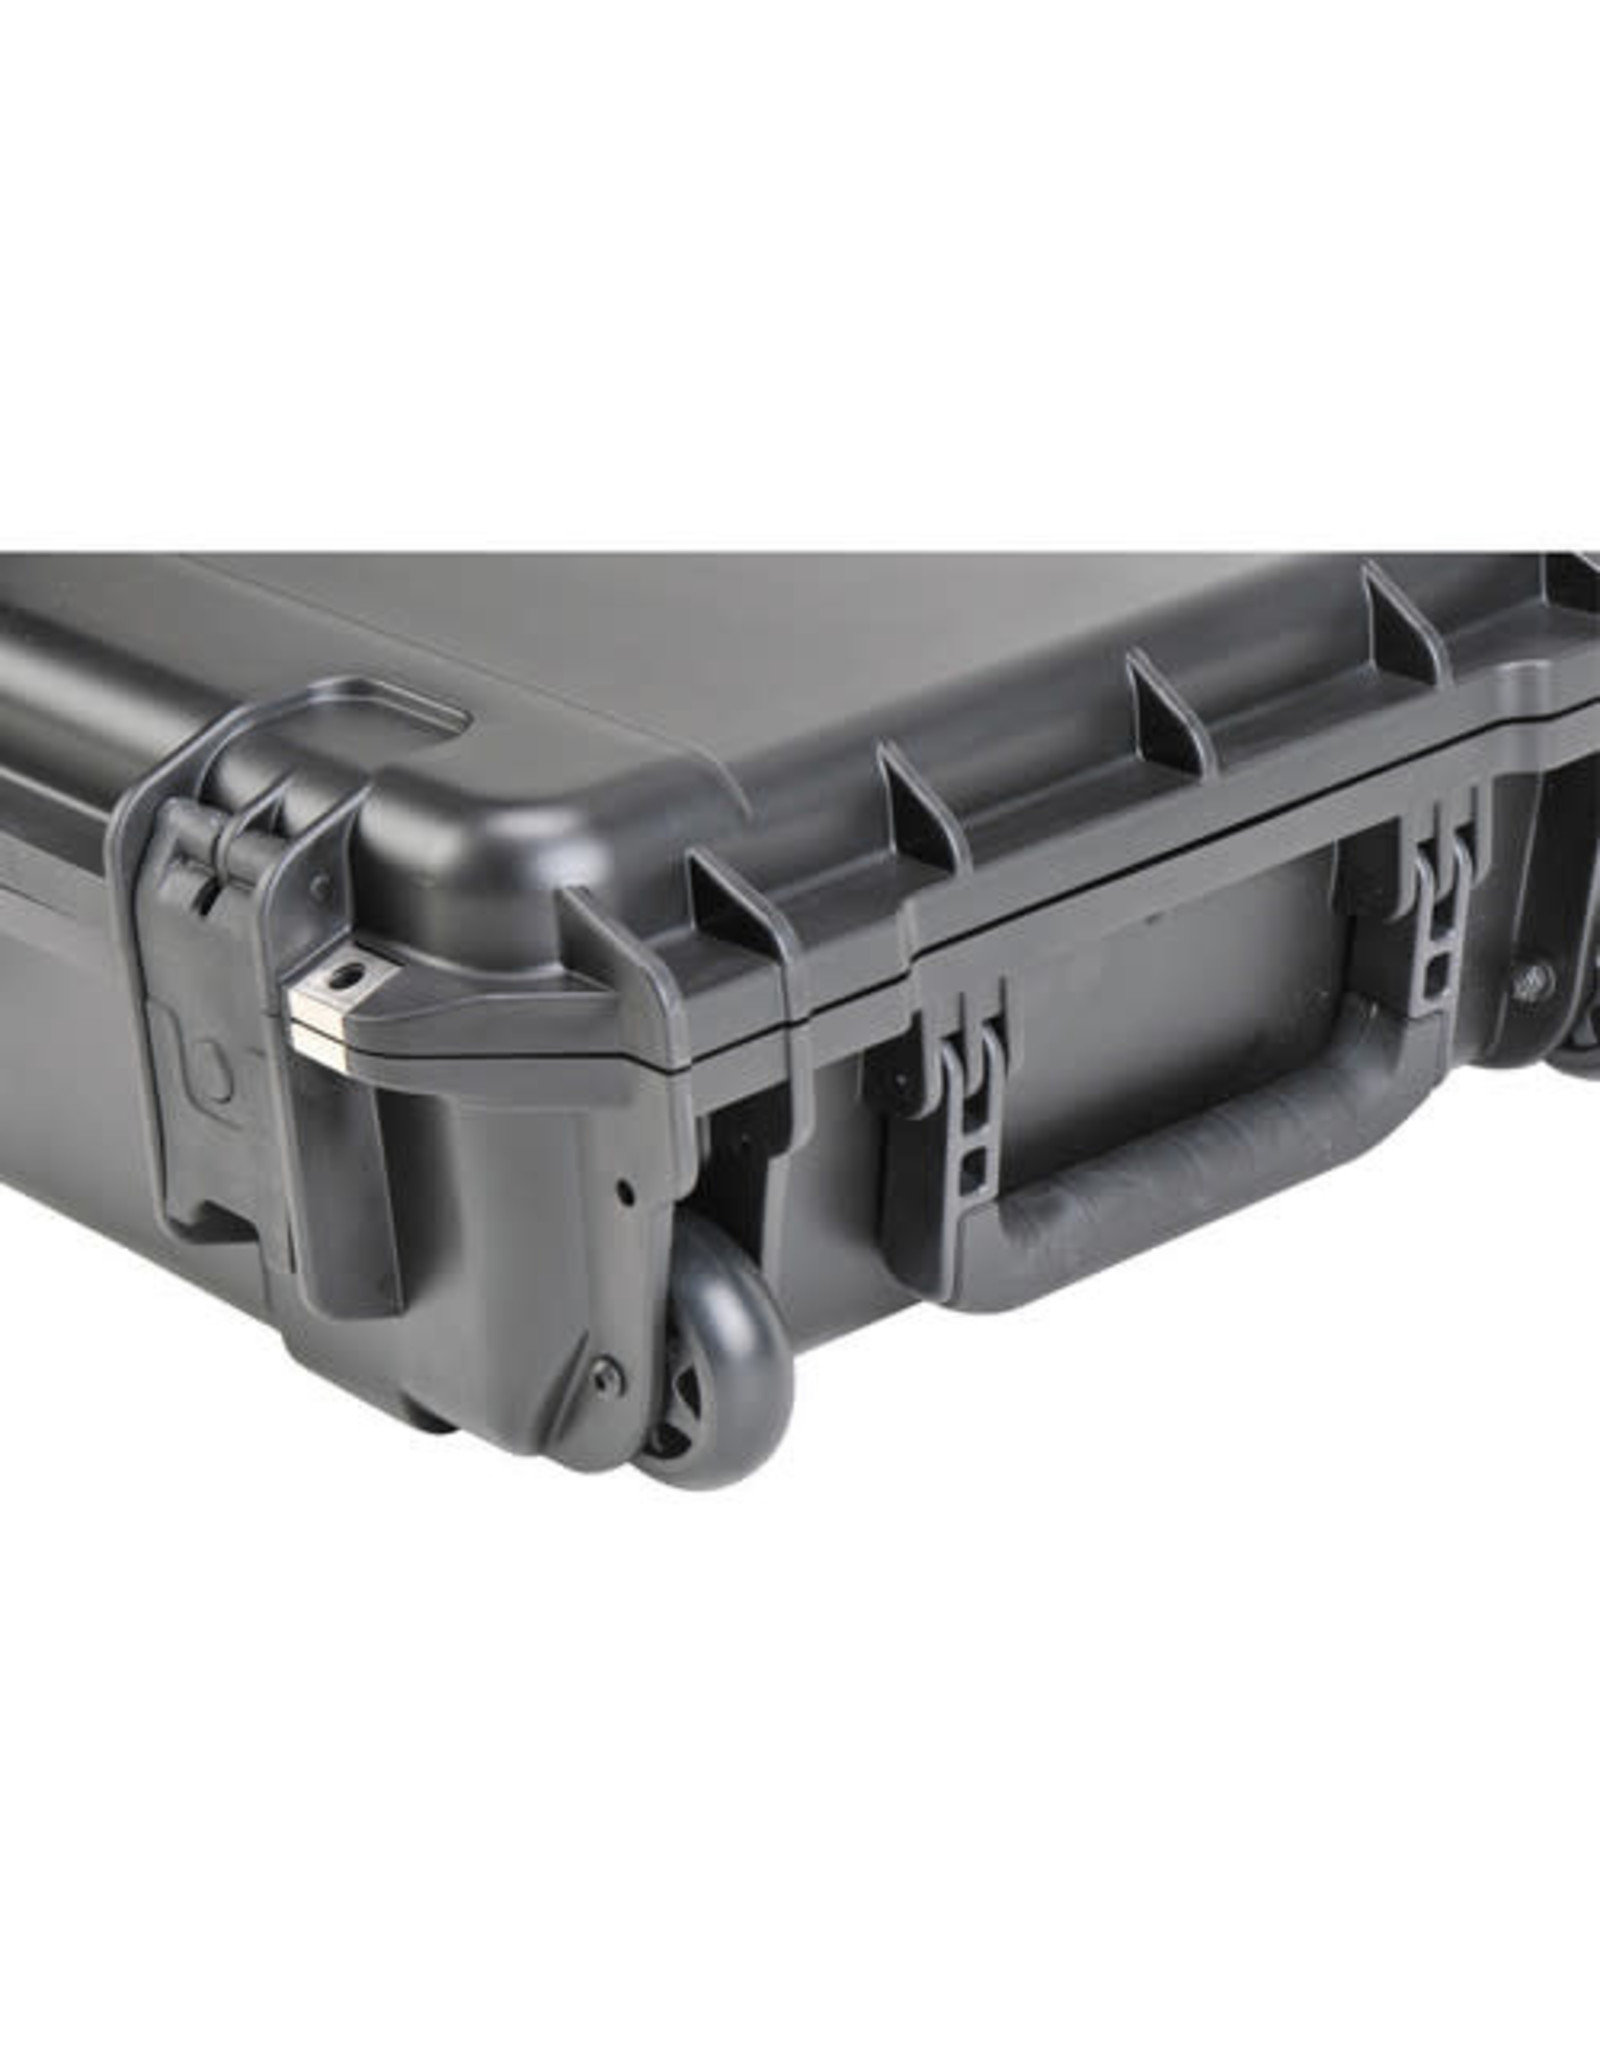 SKB Cases SKB 3i Series 3i-3614-6B-L Waterproof Case with Wheels (Black)